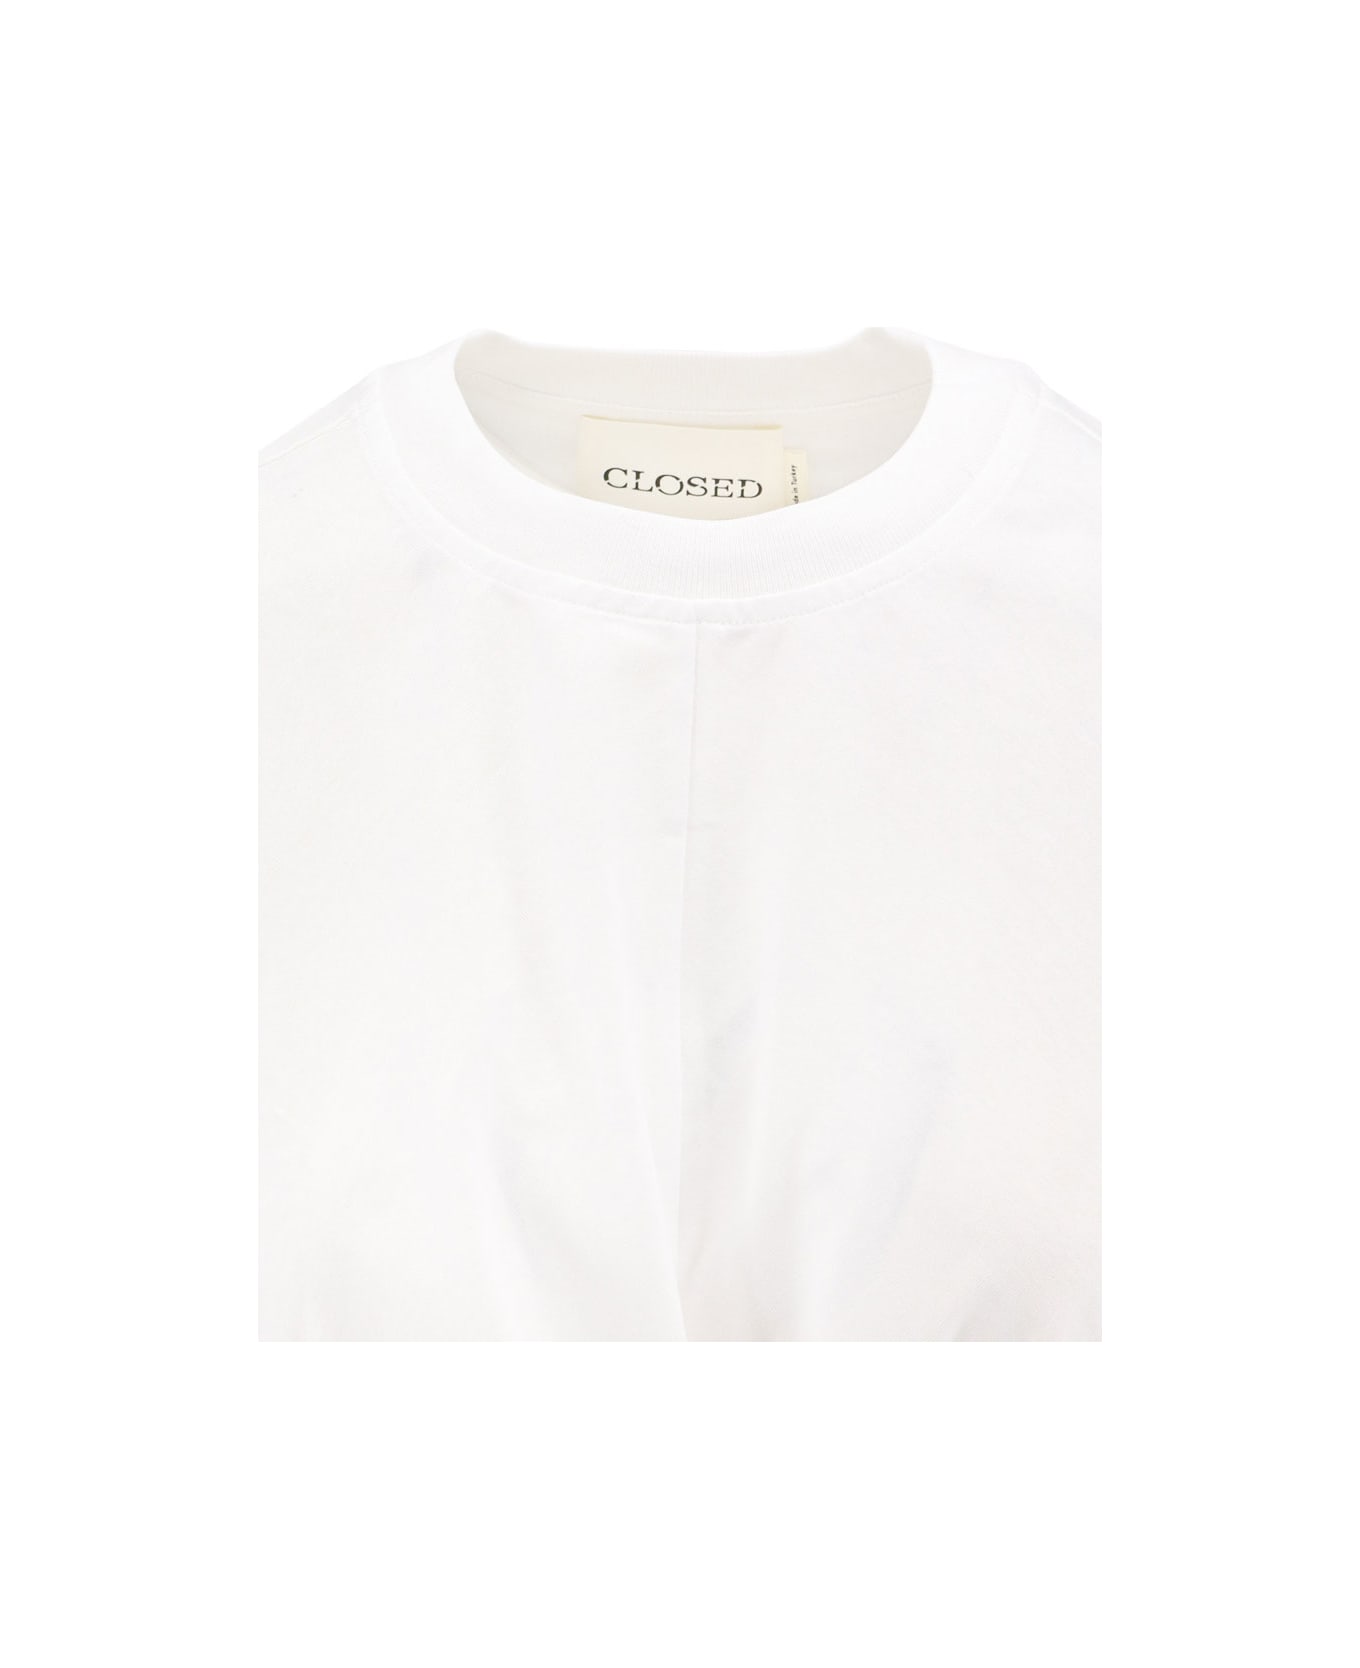 Closed T-shirt - White Tシャツ